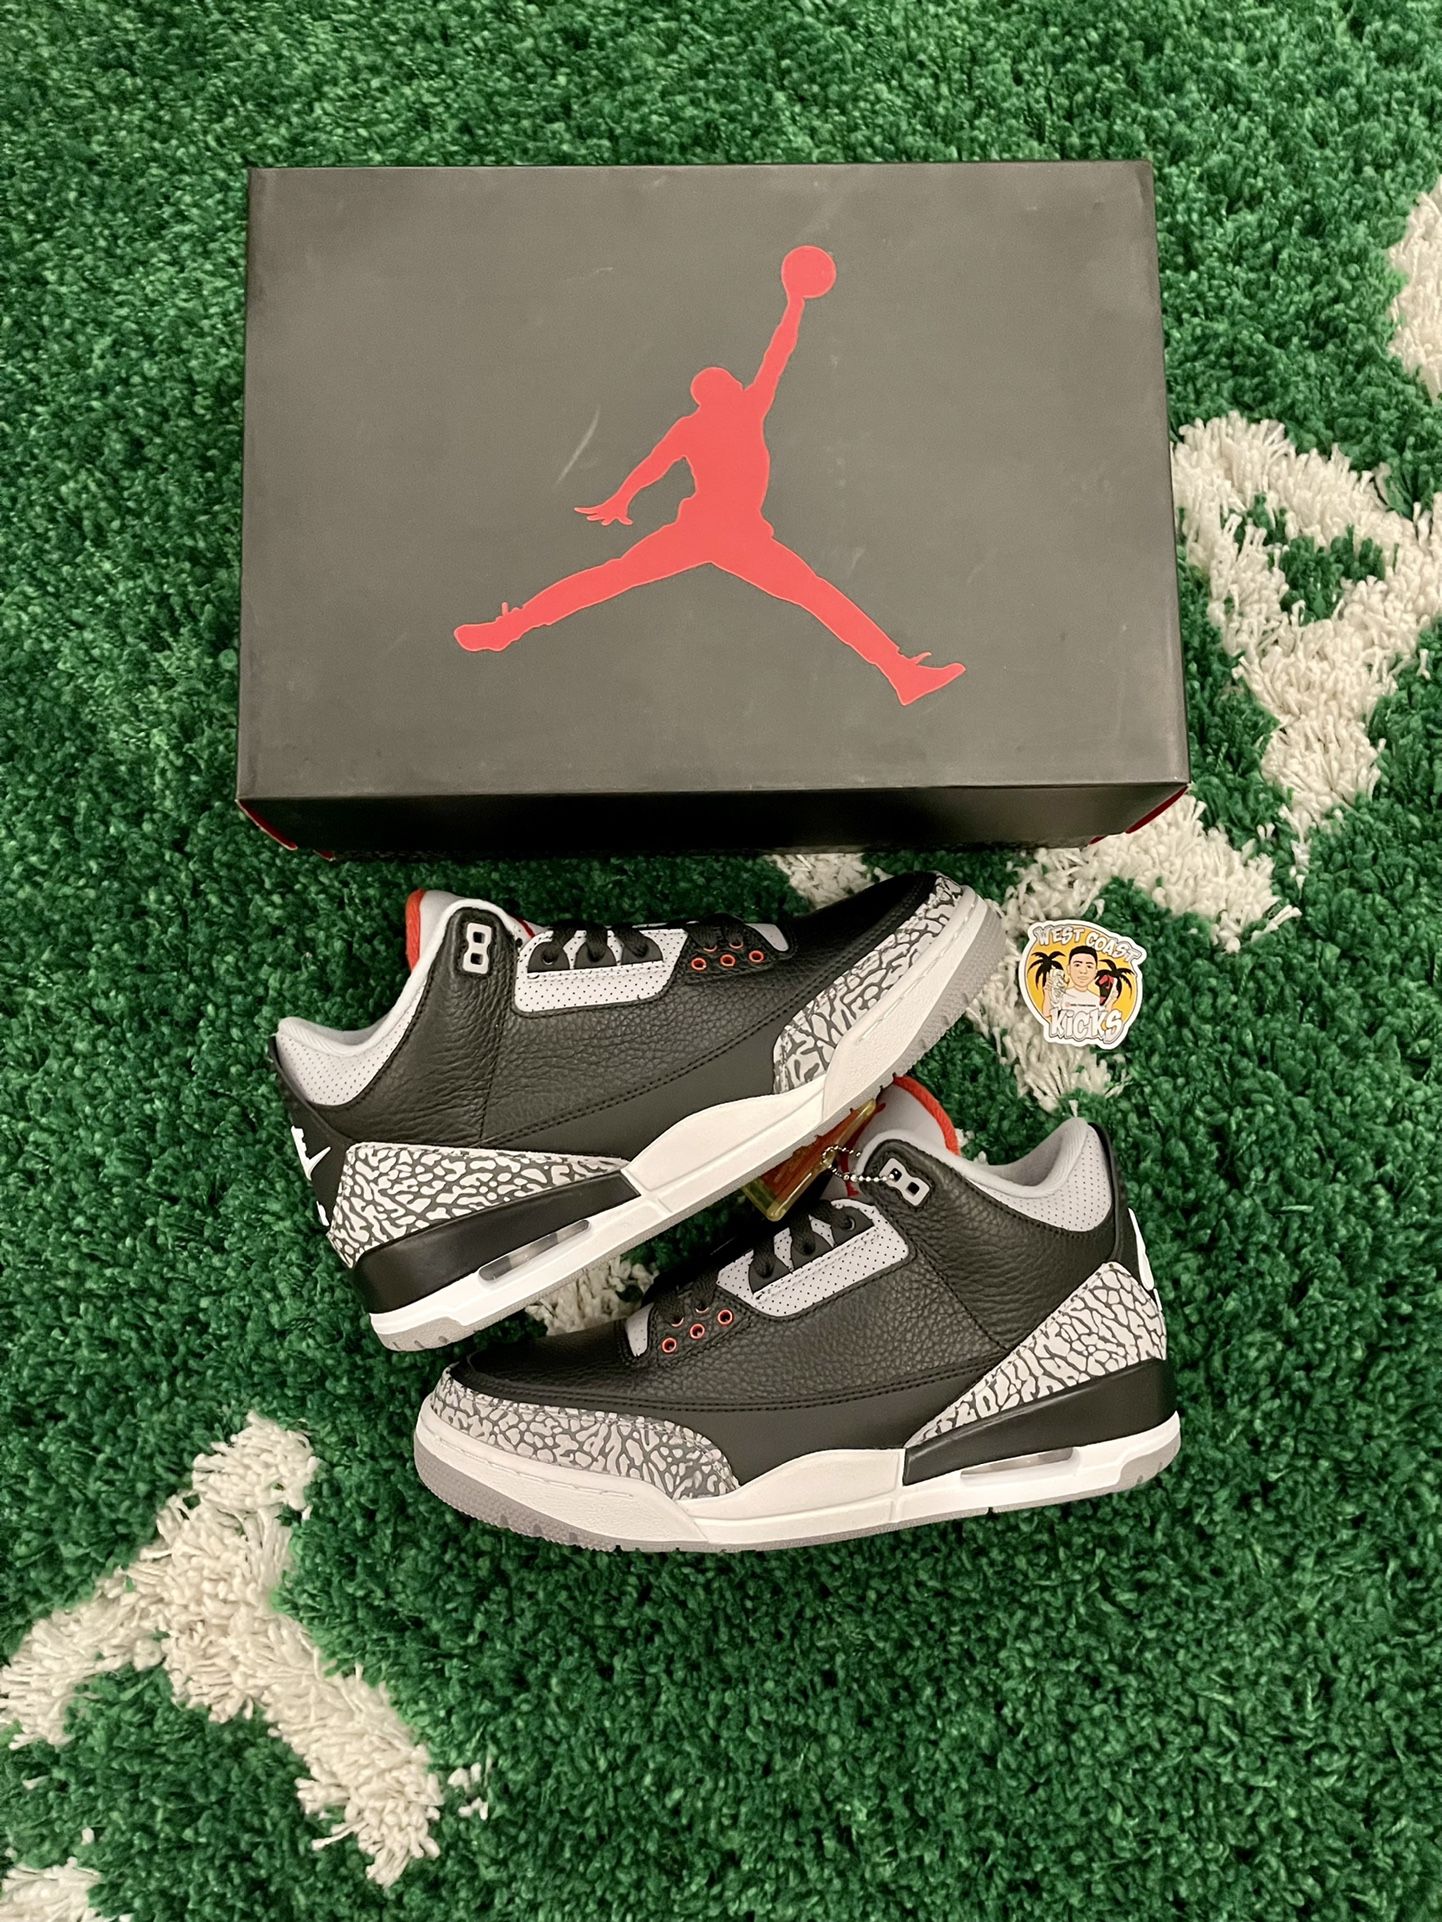 Jordan 3 Retro Black Cement 2018 Size 9.5